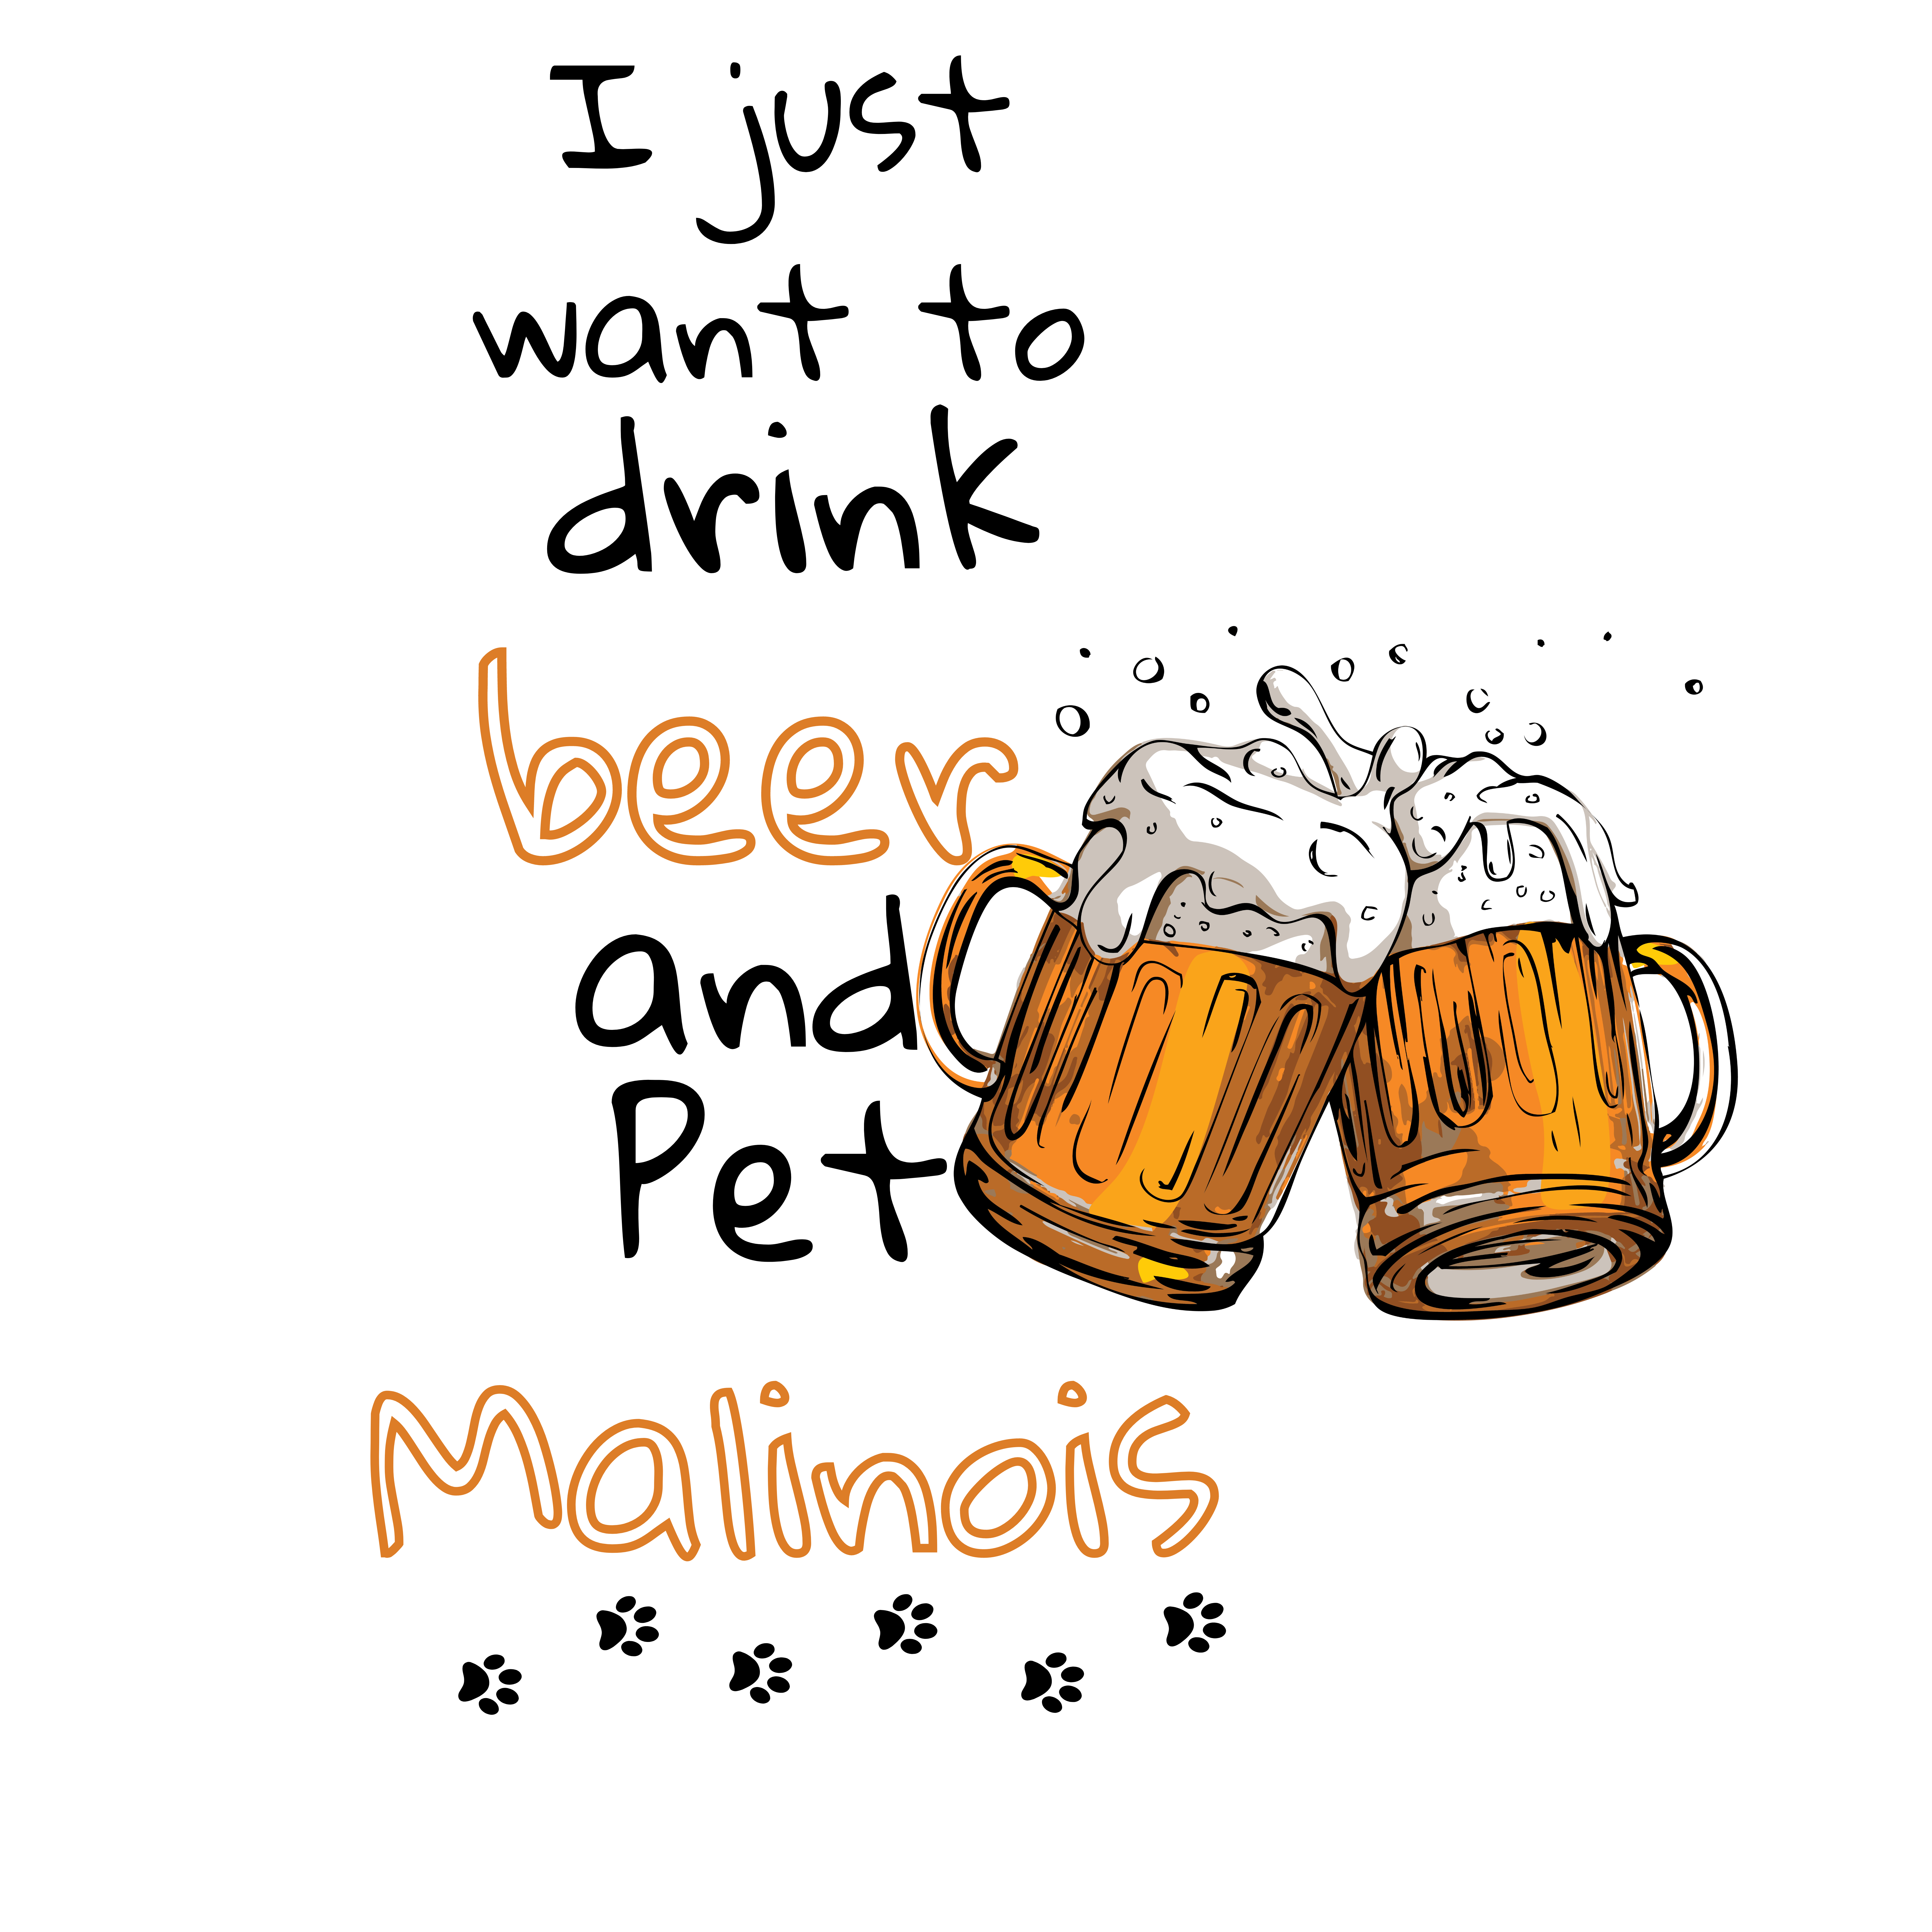 Beer Love and Malinois Love